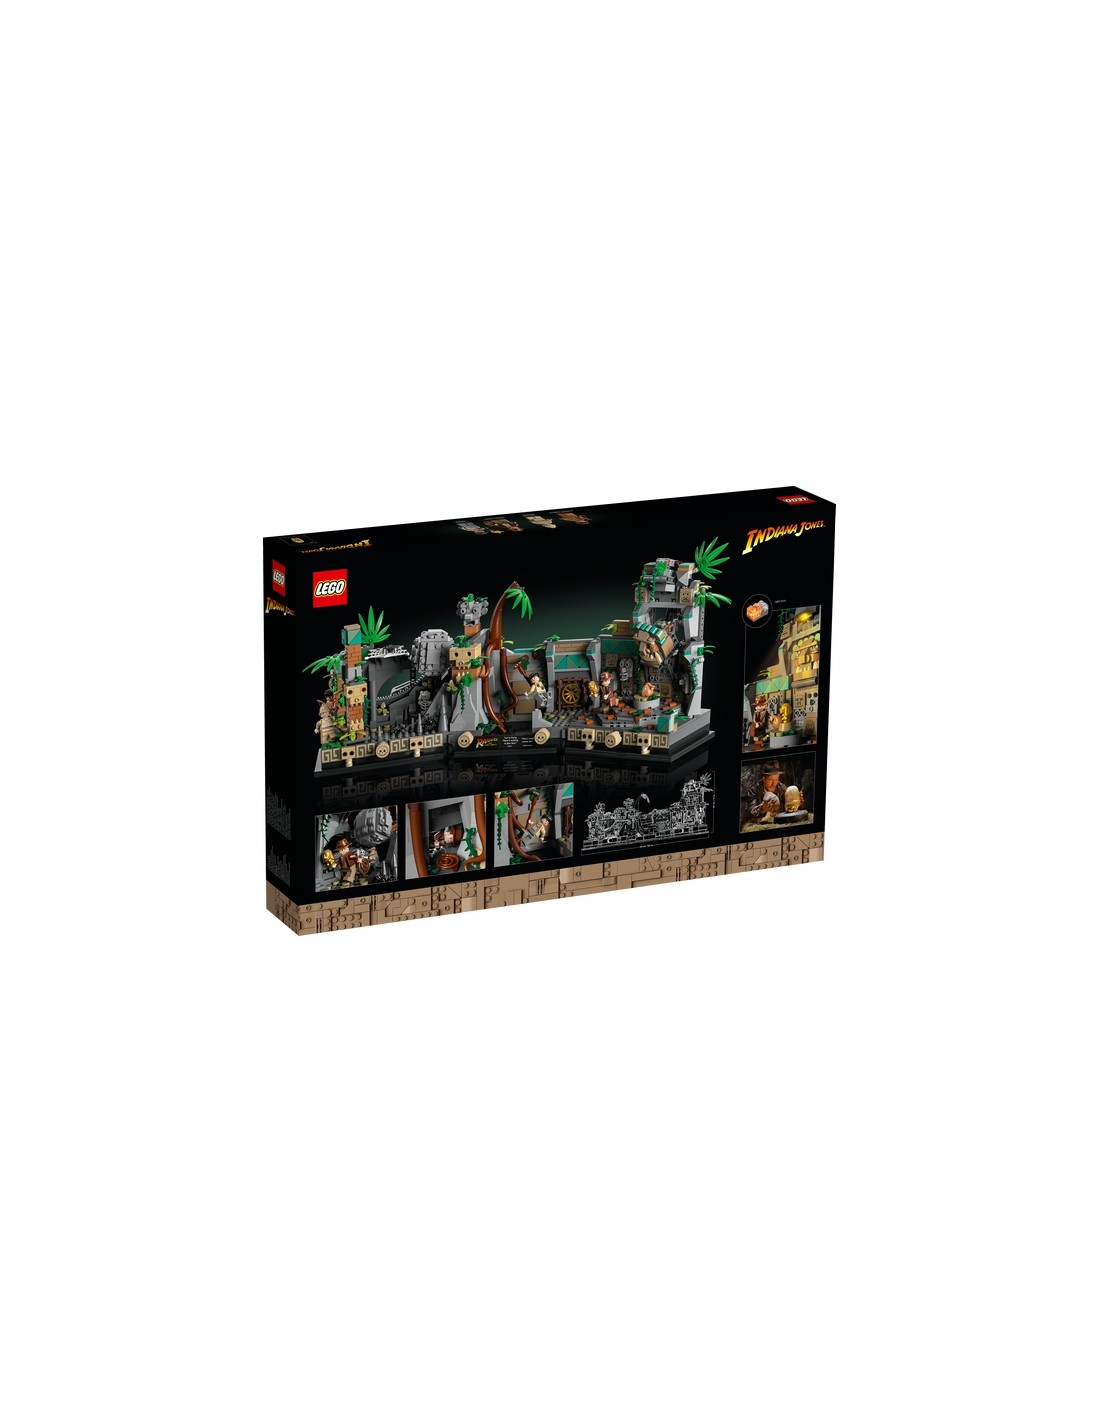 77015 - LEGO Indiana Jones - Il Tempio dell'idolo doro – Full Toys